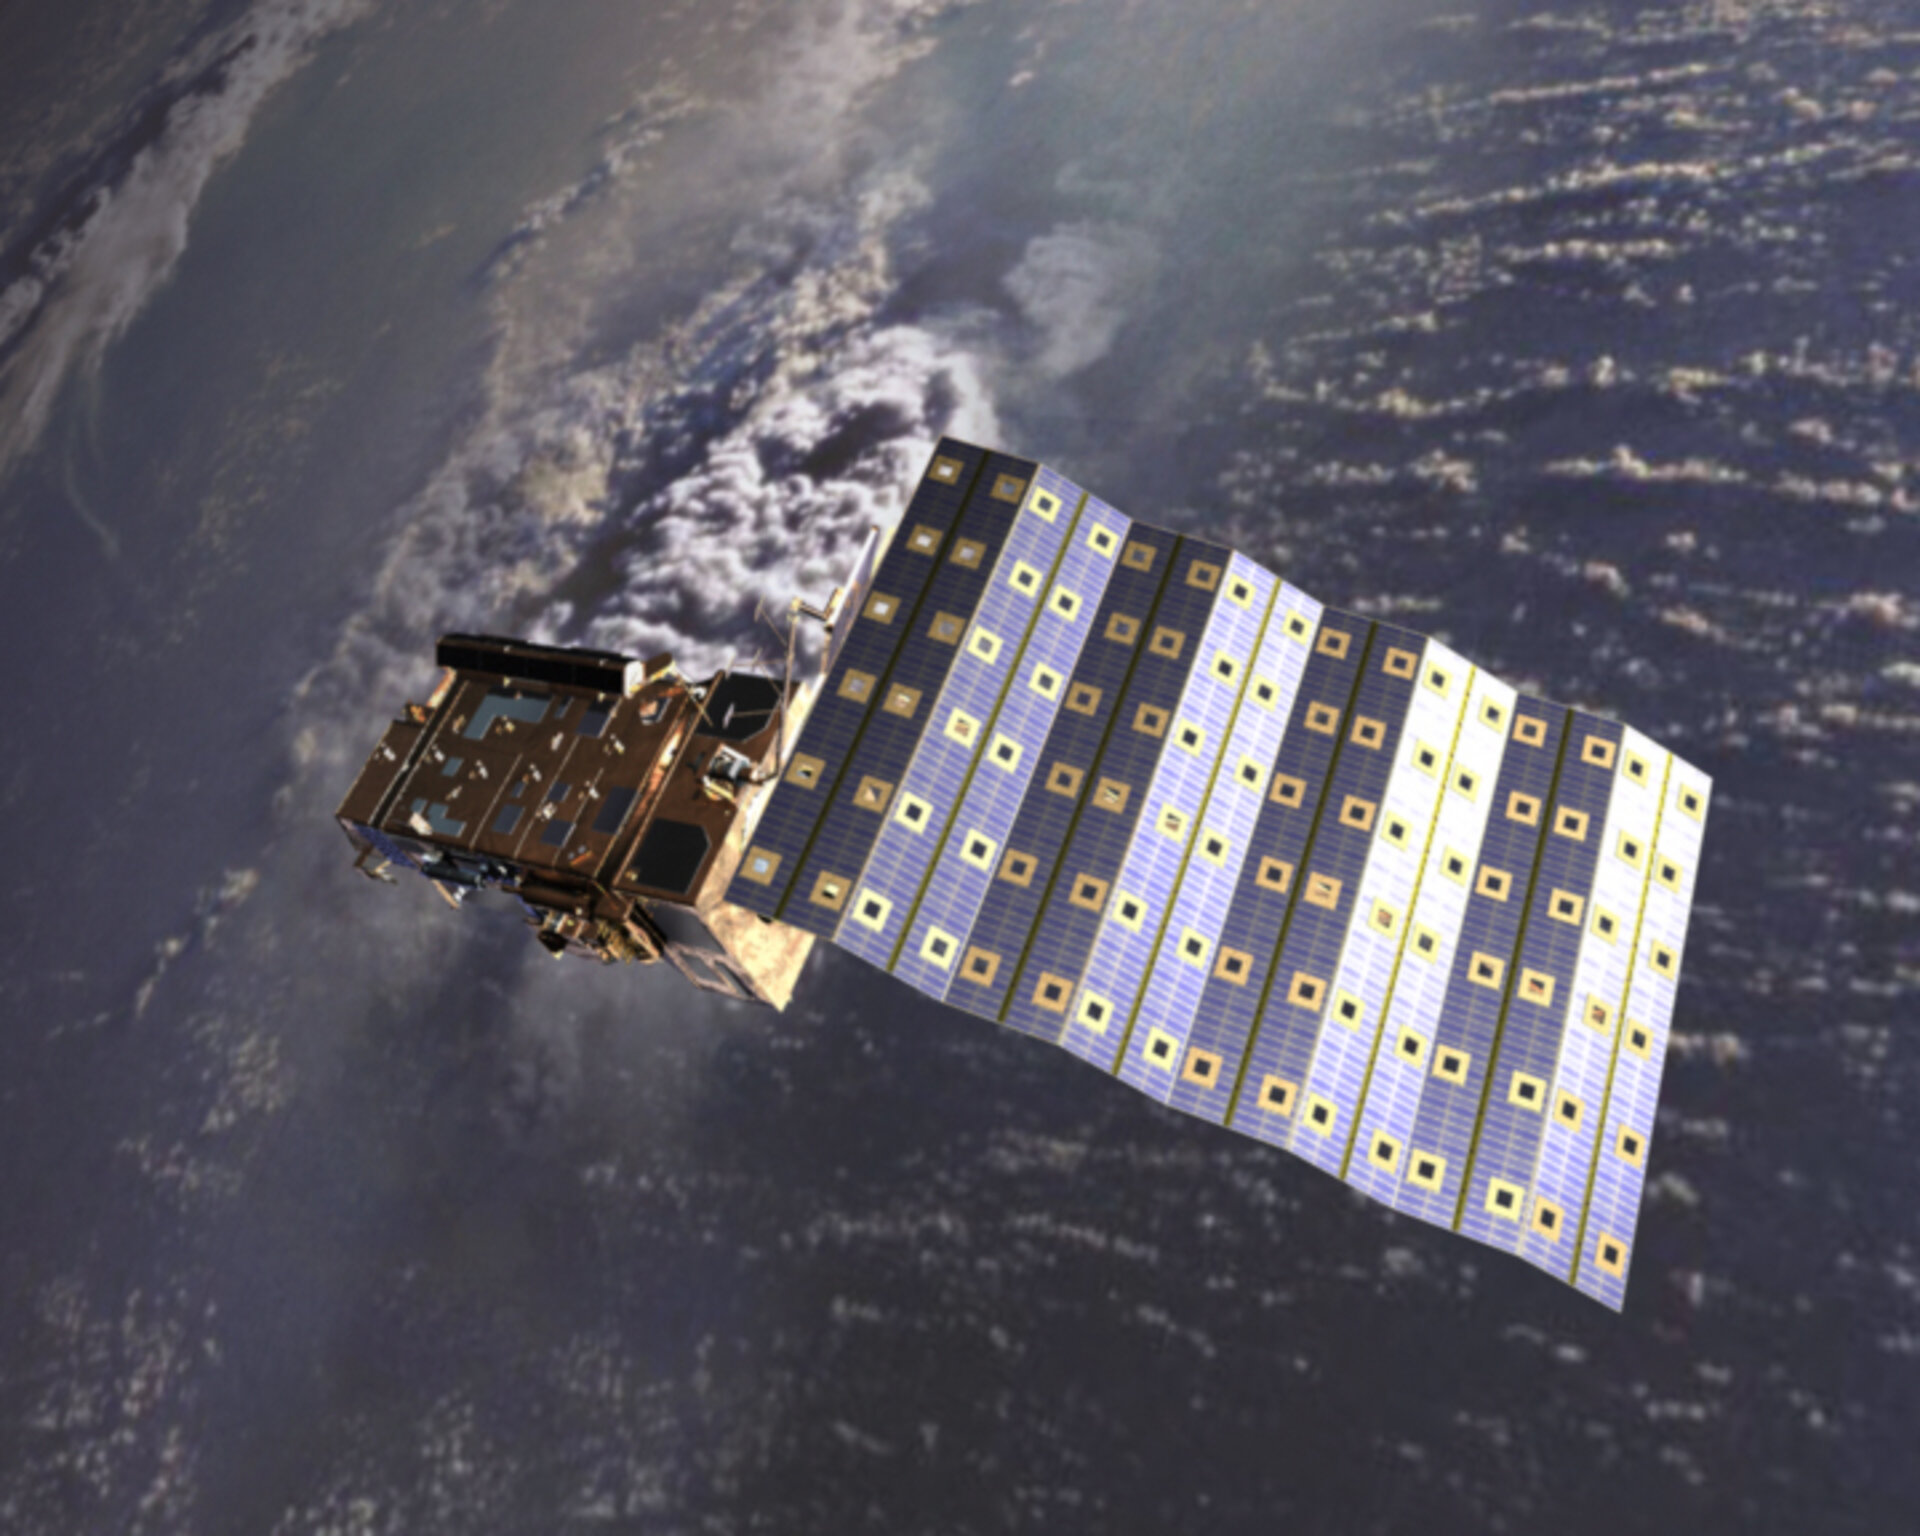 Deployment of the solar array